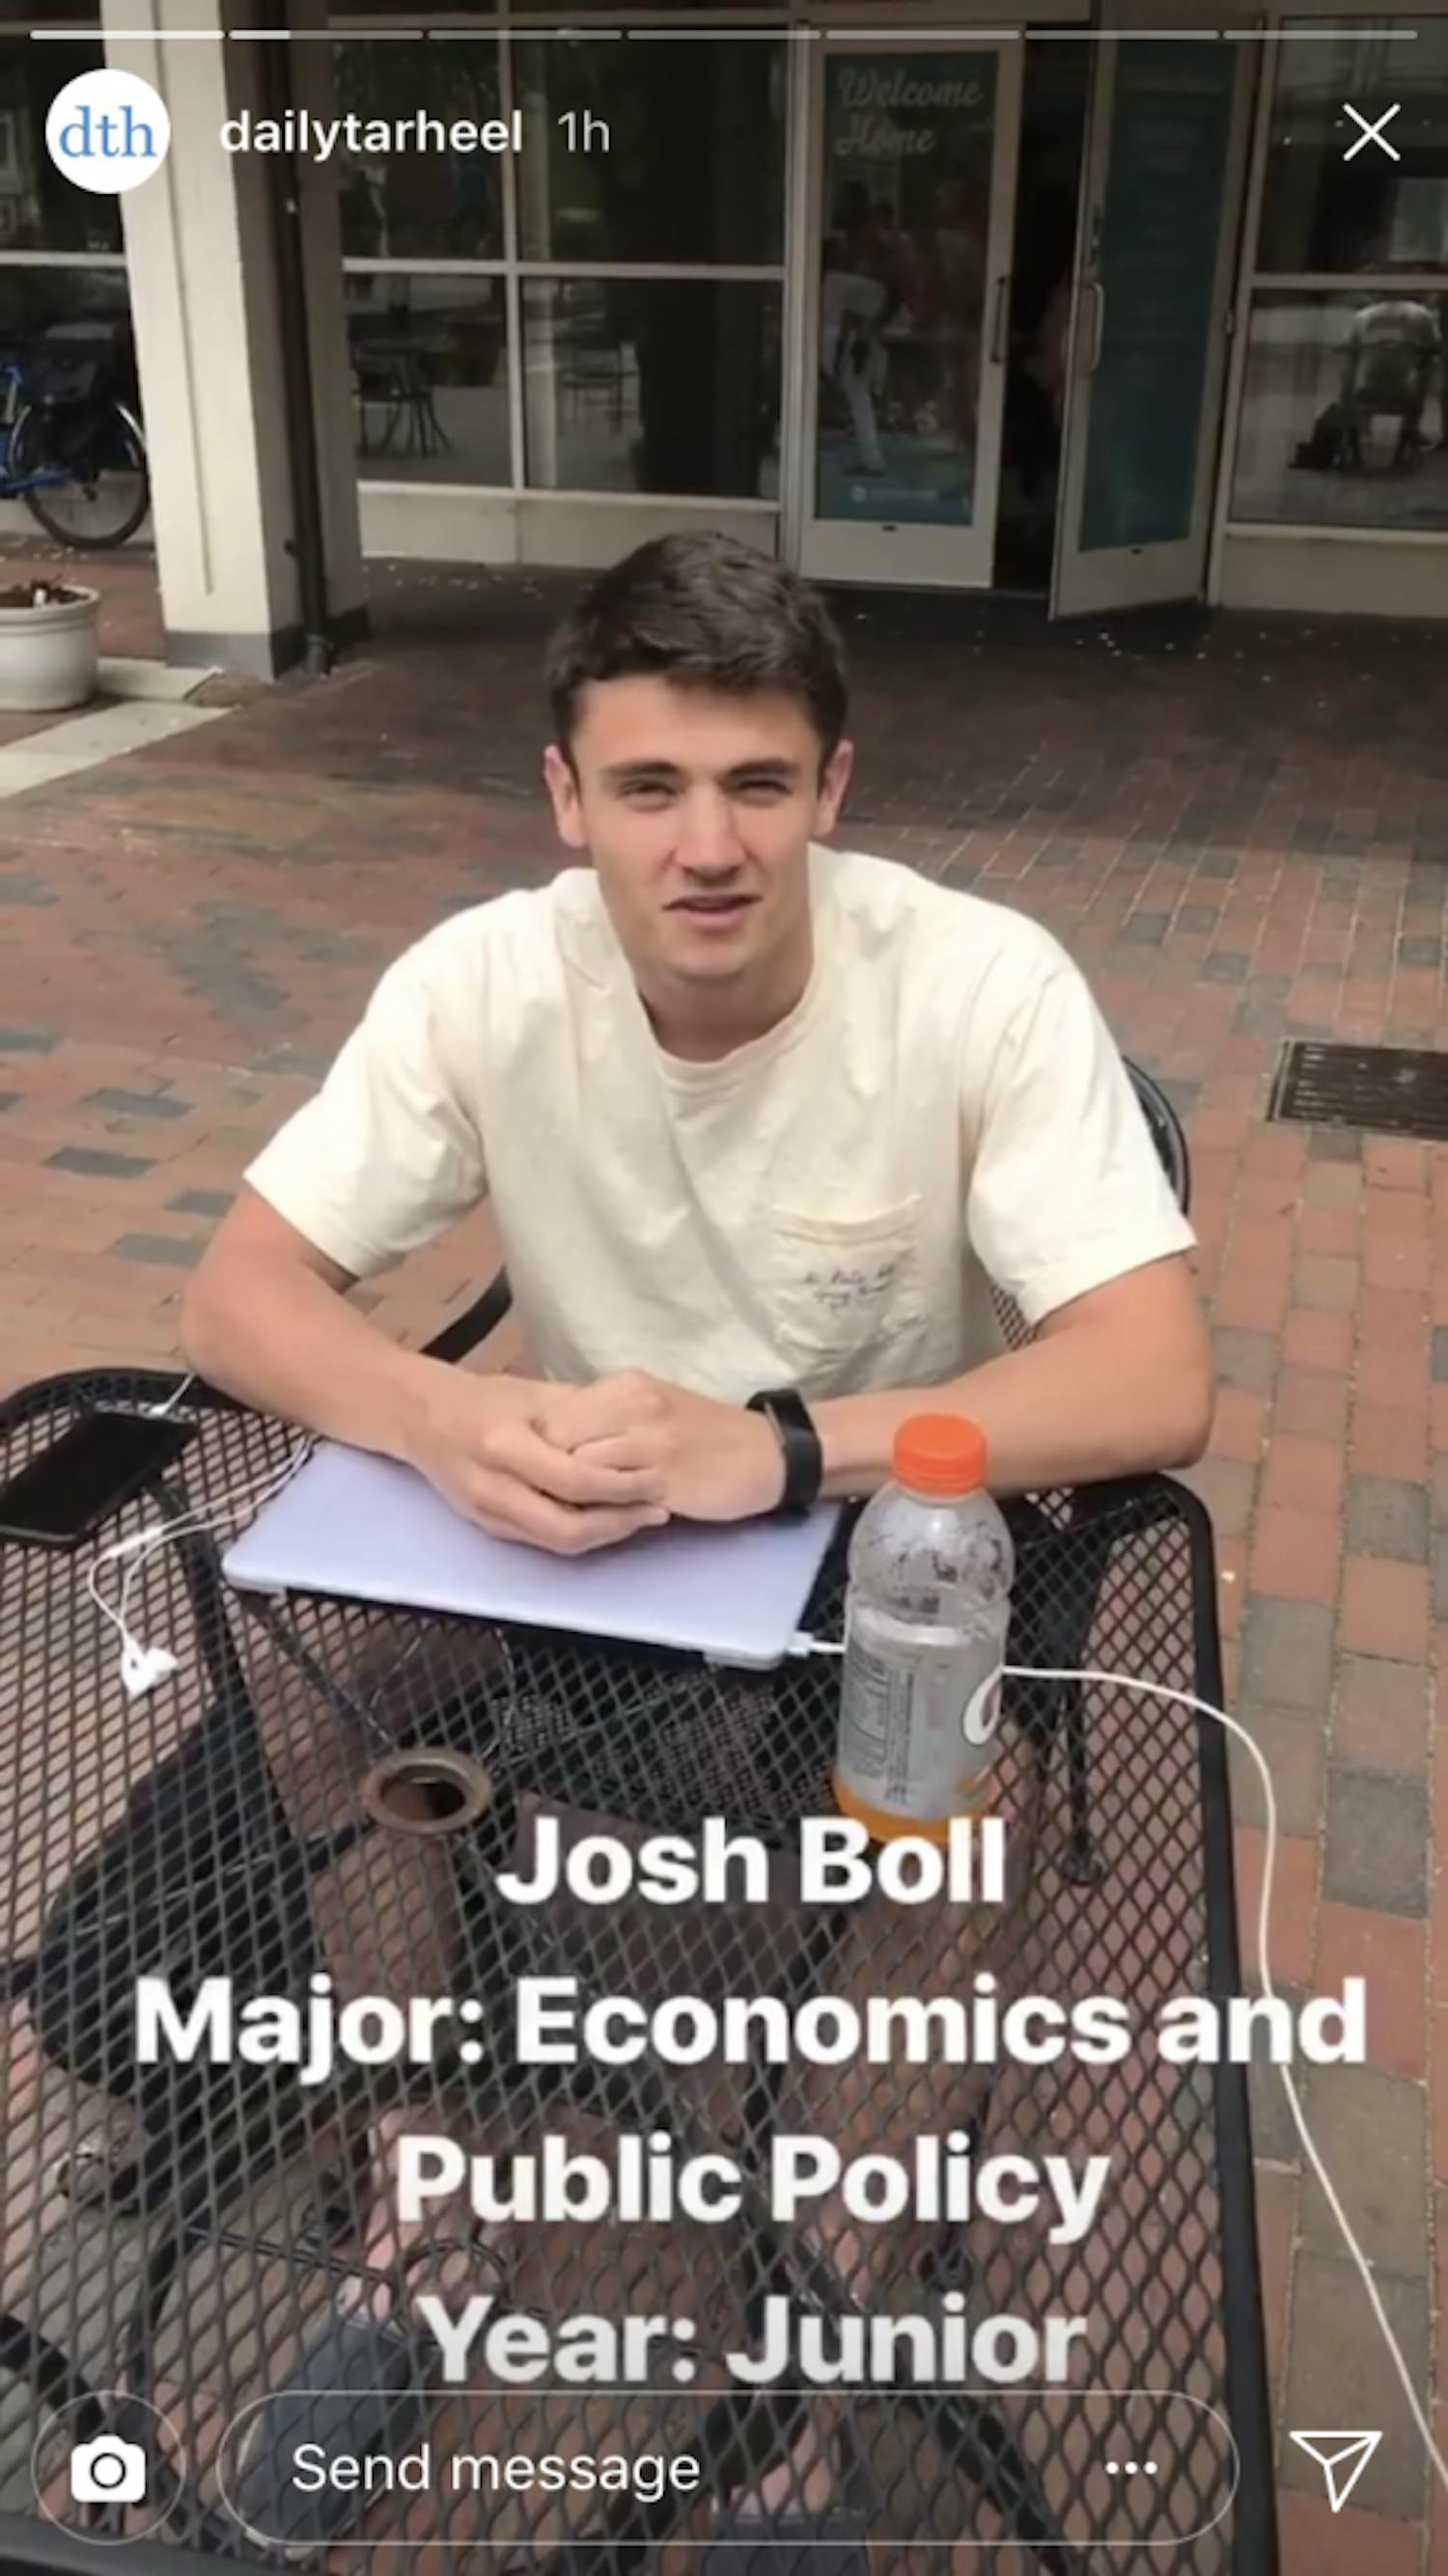 Josh Boll